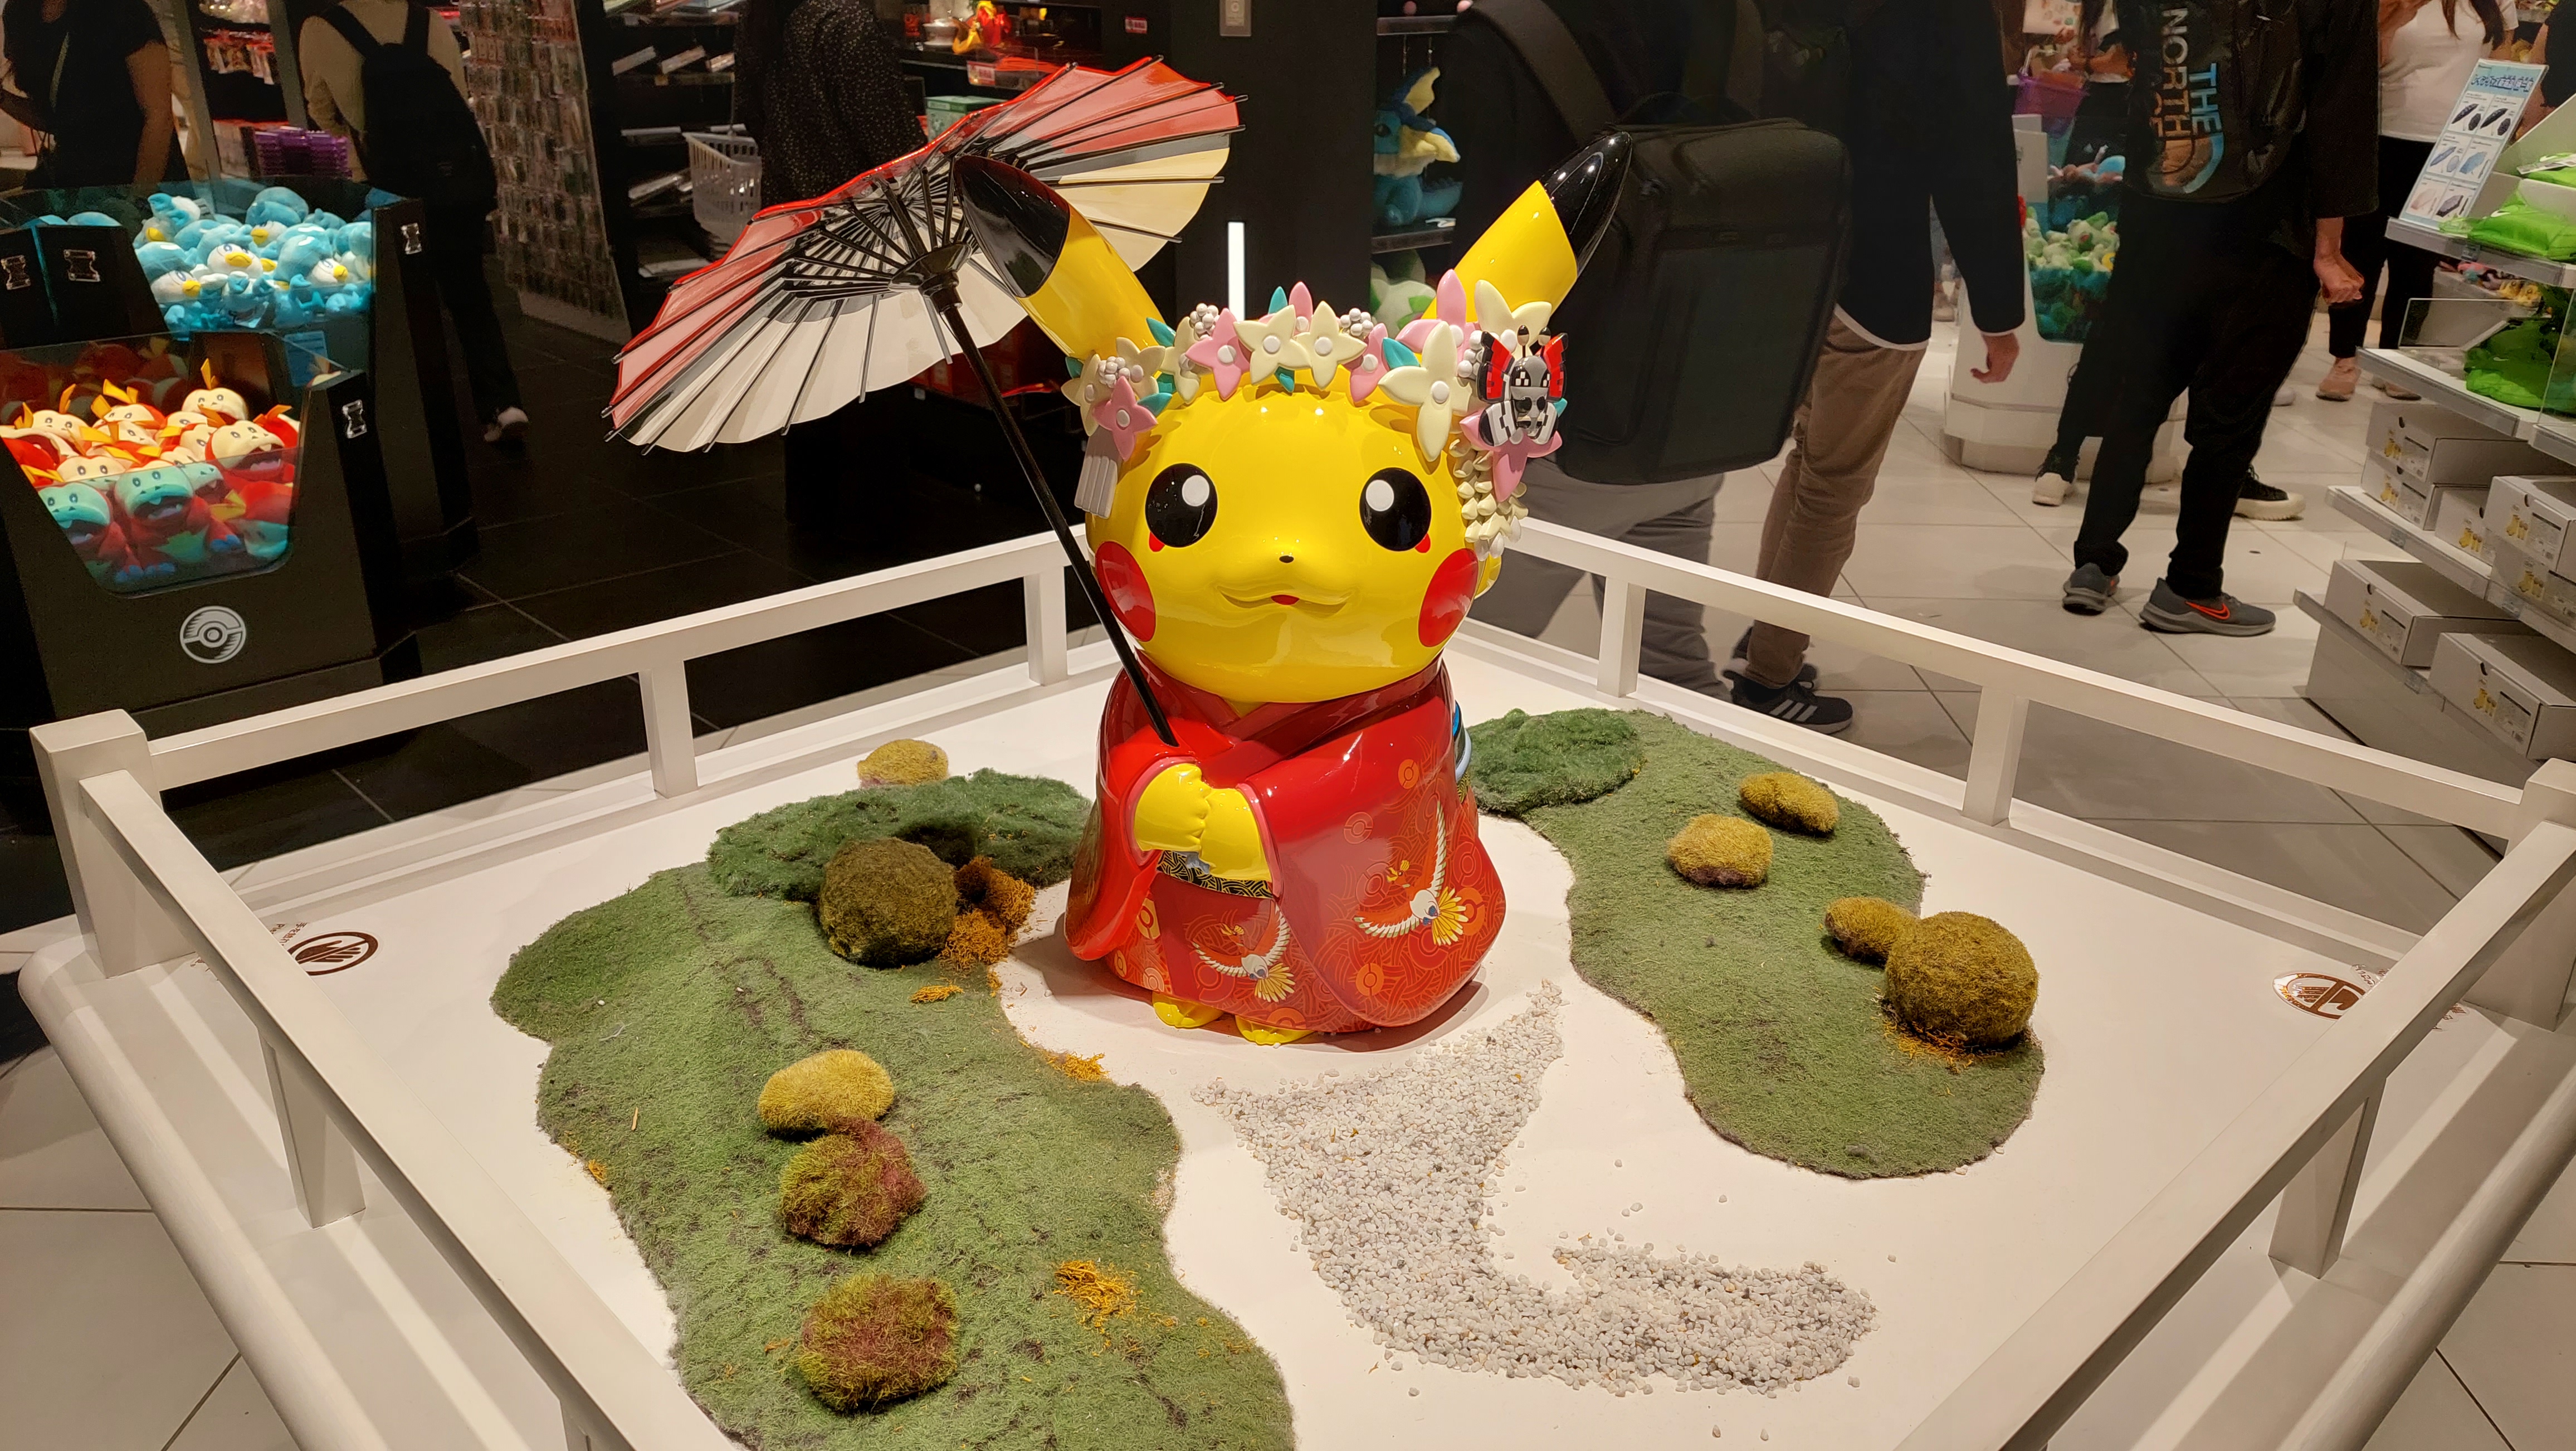 Kyoto Pokemon Center 2 by Xscapix on DeviantArt